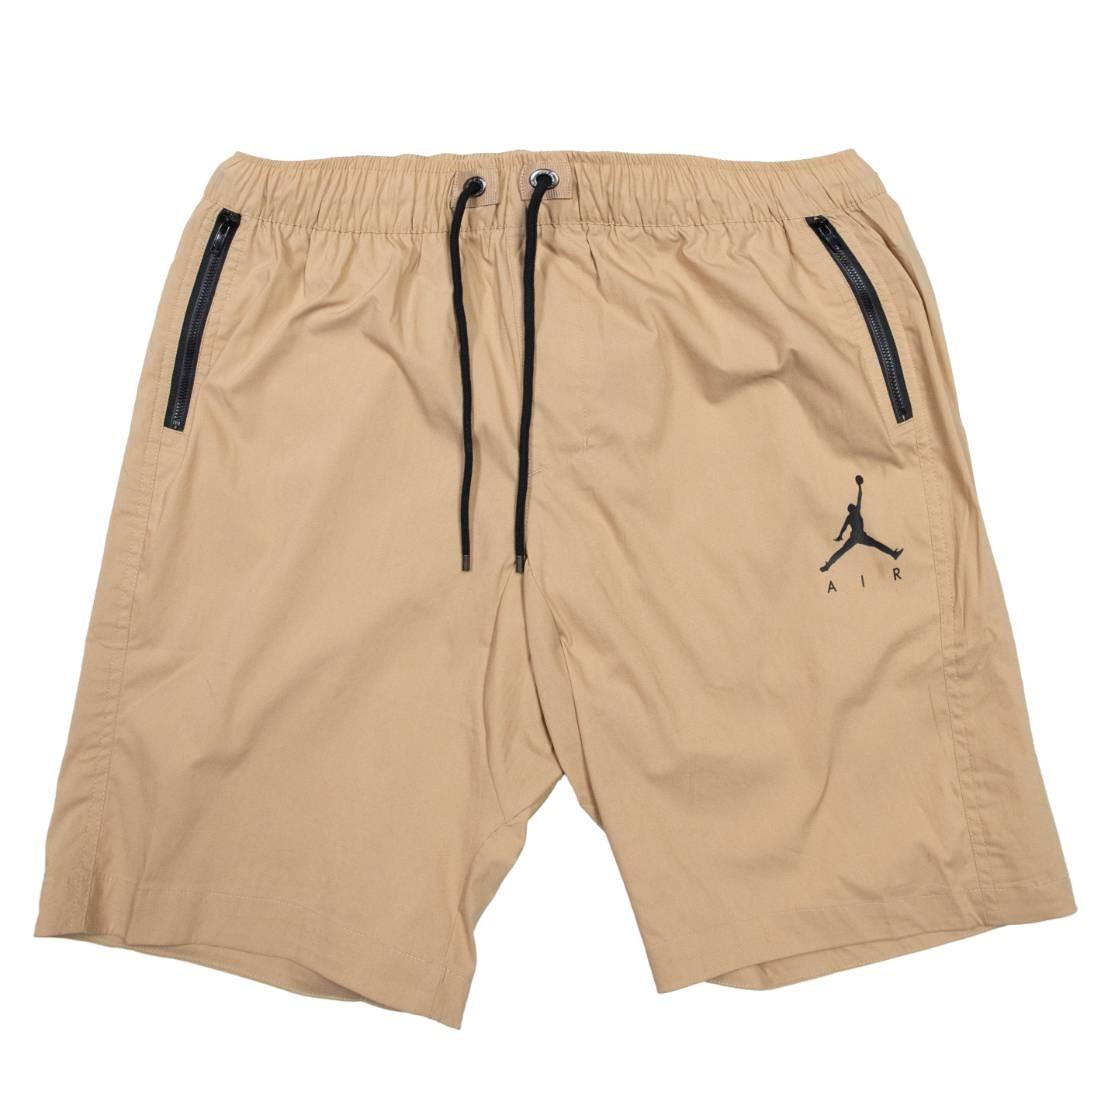 Jordan Men Jumpman Shorts (desert / black)